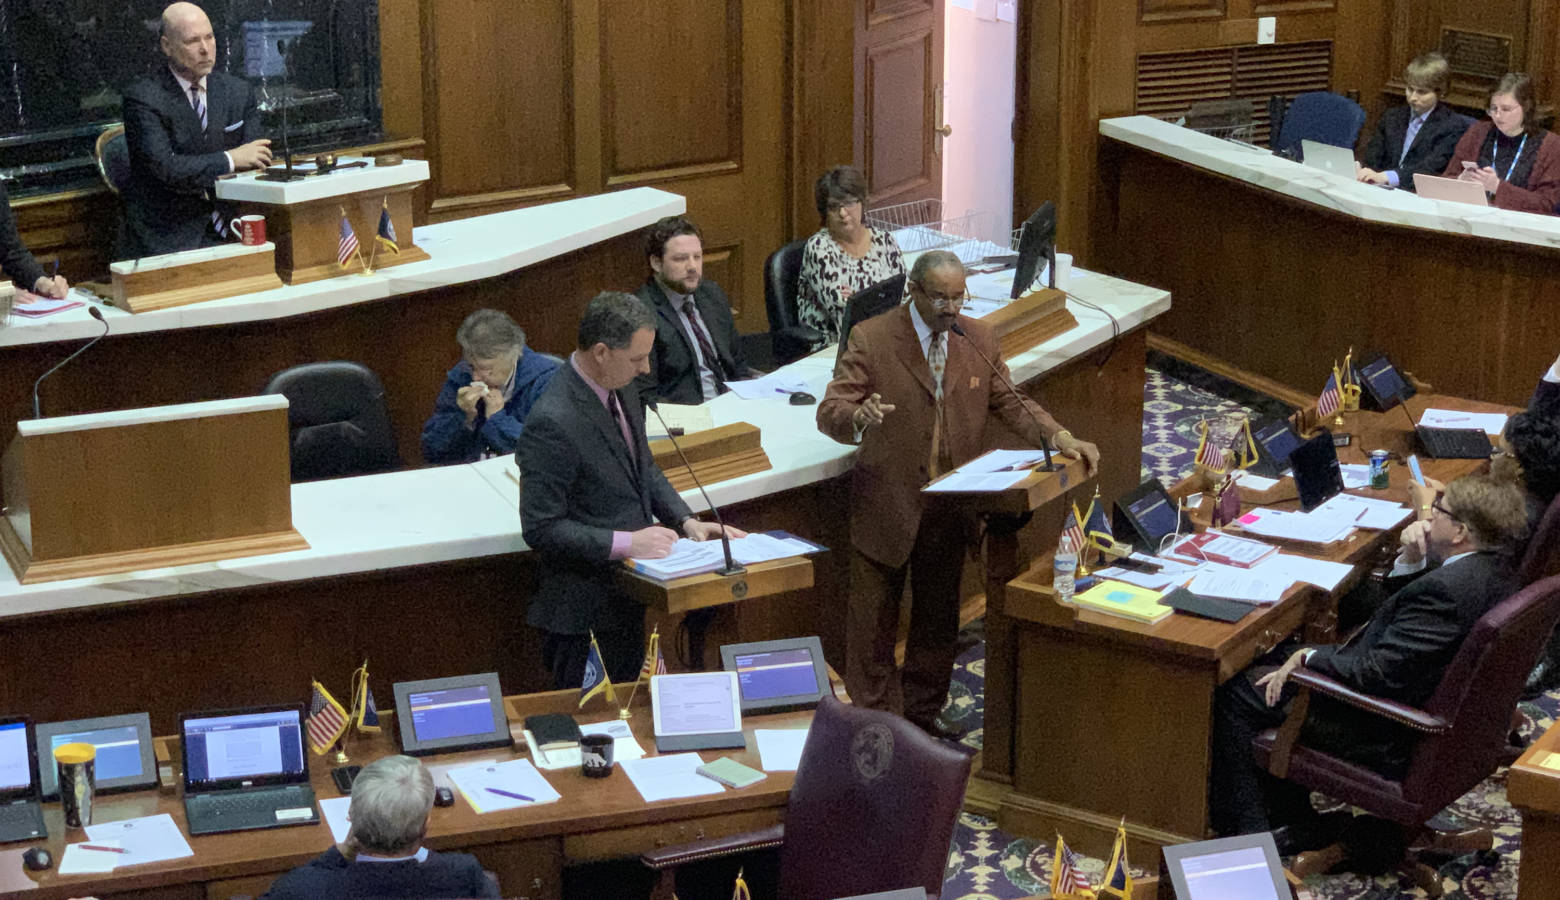 Rep. Todd Huston (R-Fishers) debates the budget bill with Rep. Vernon Smith (D-Gary). (Brandon Smith/IPB News)